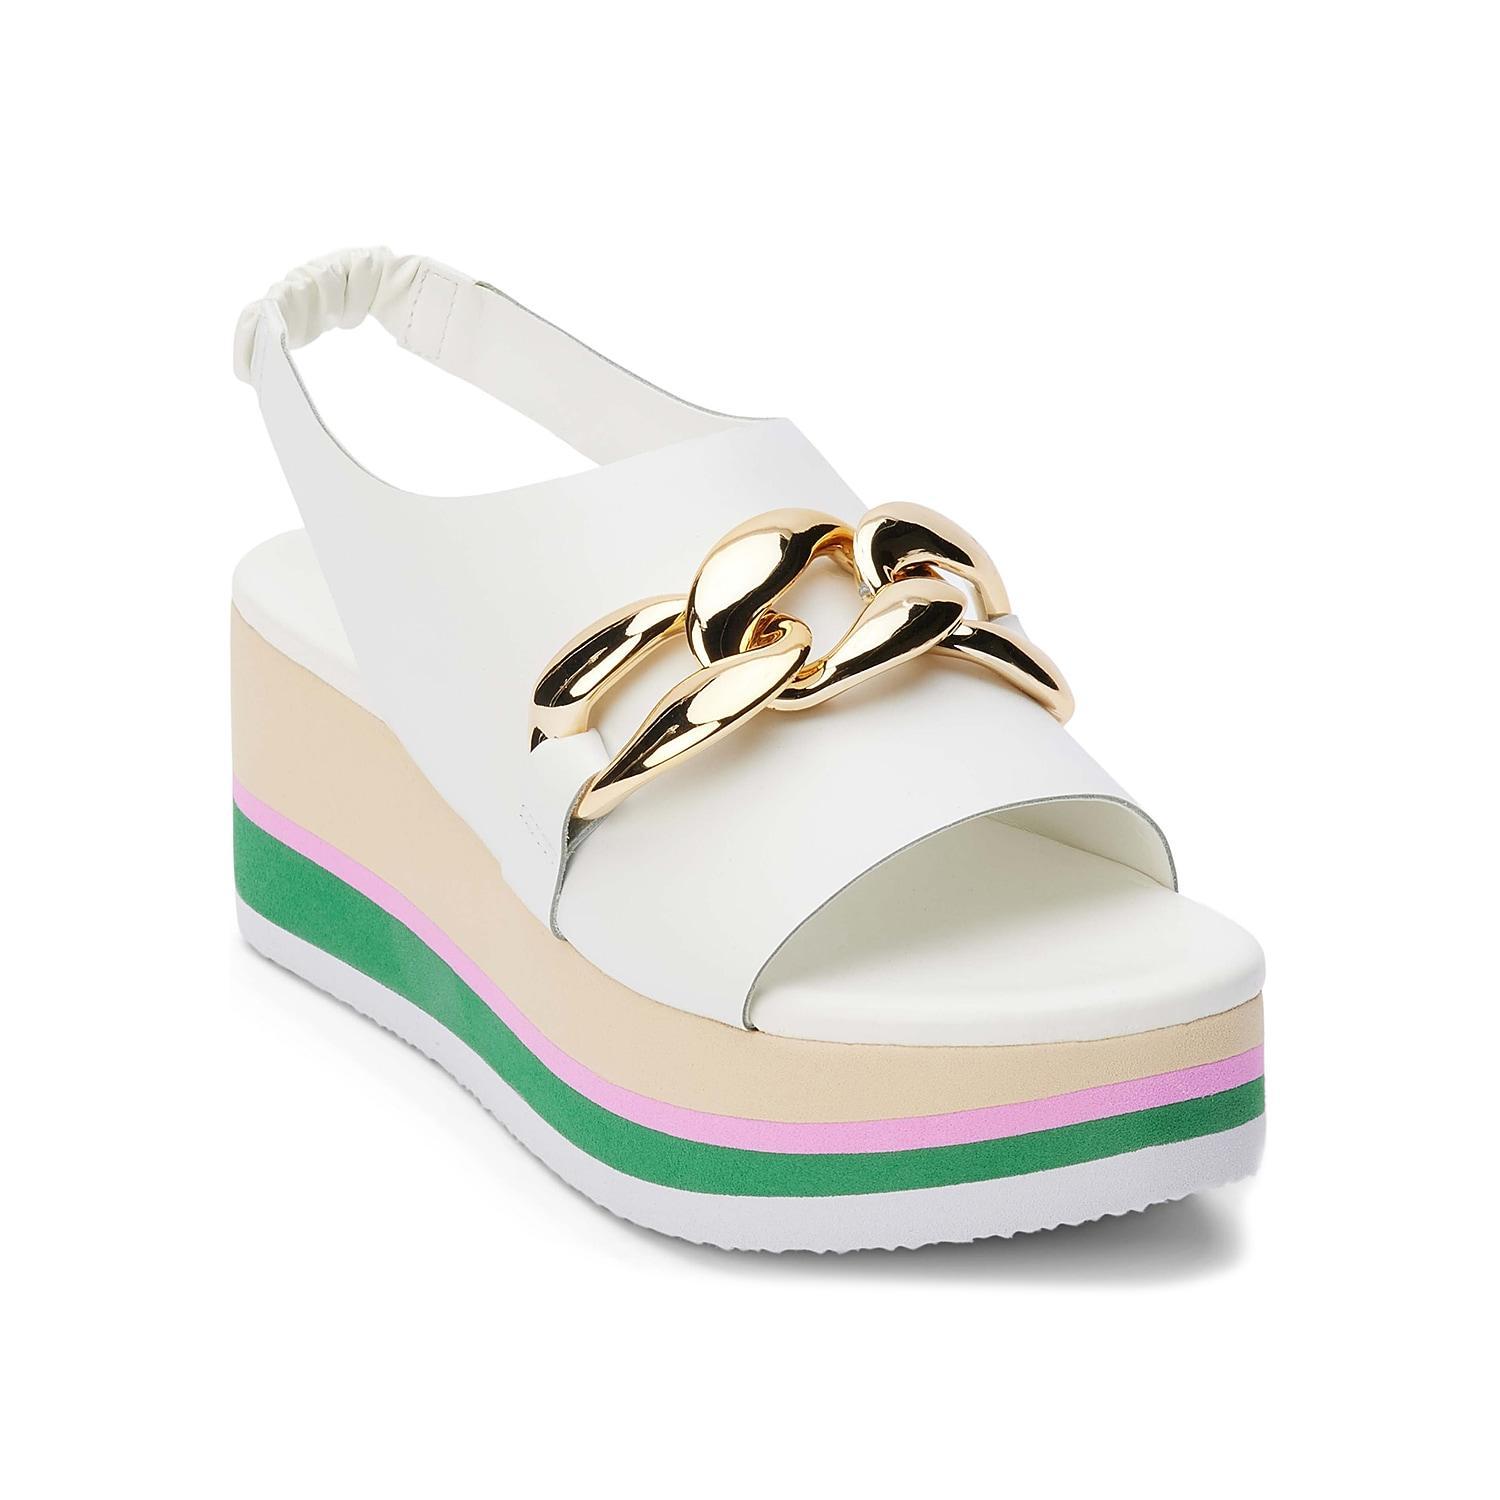 Matisse Natalia Platform Sandals Product Image